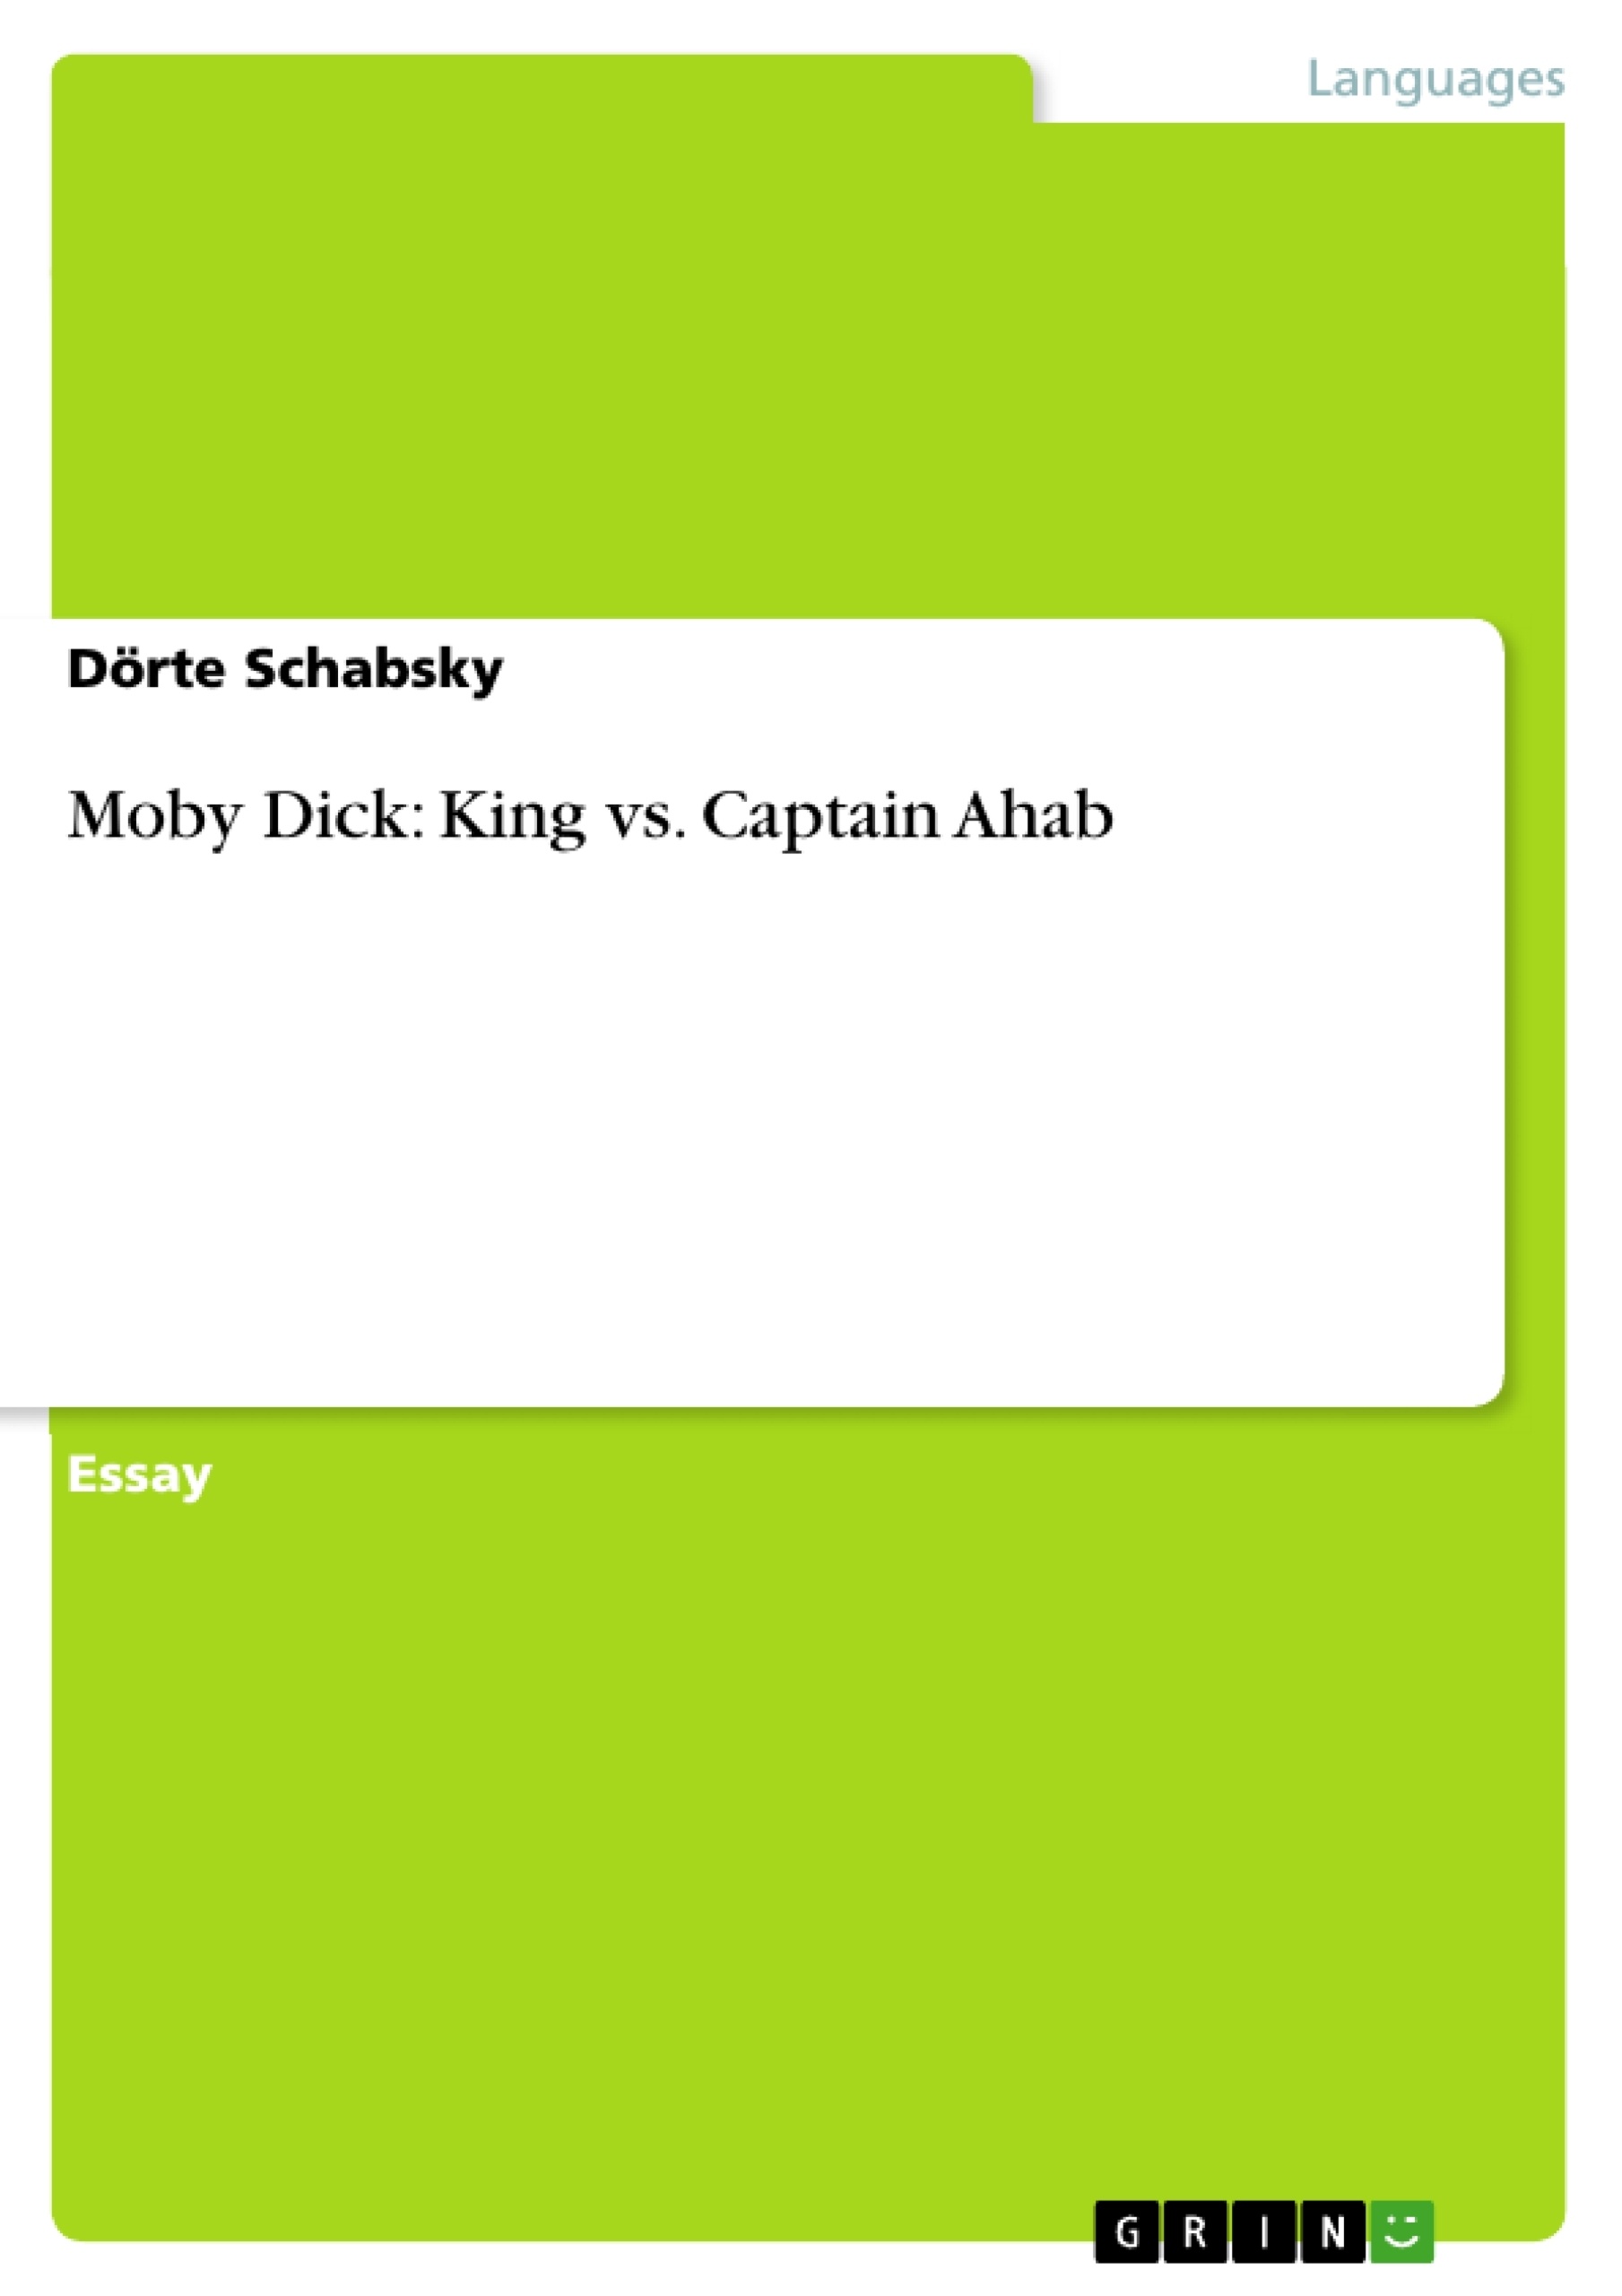 Título: Moby Dick: King vs. Captain Ahab